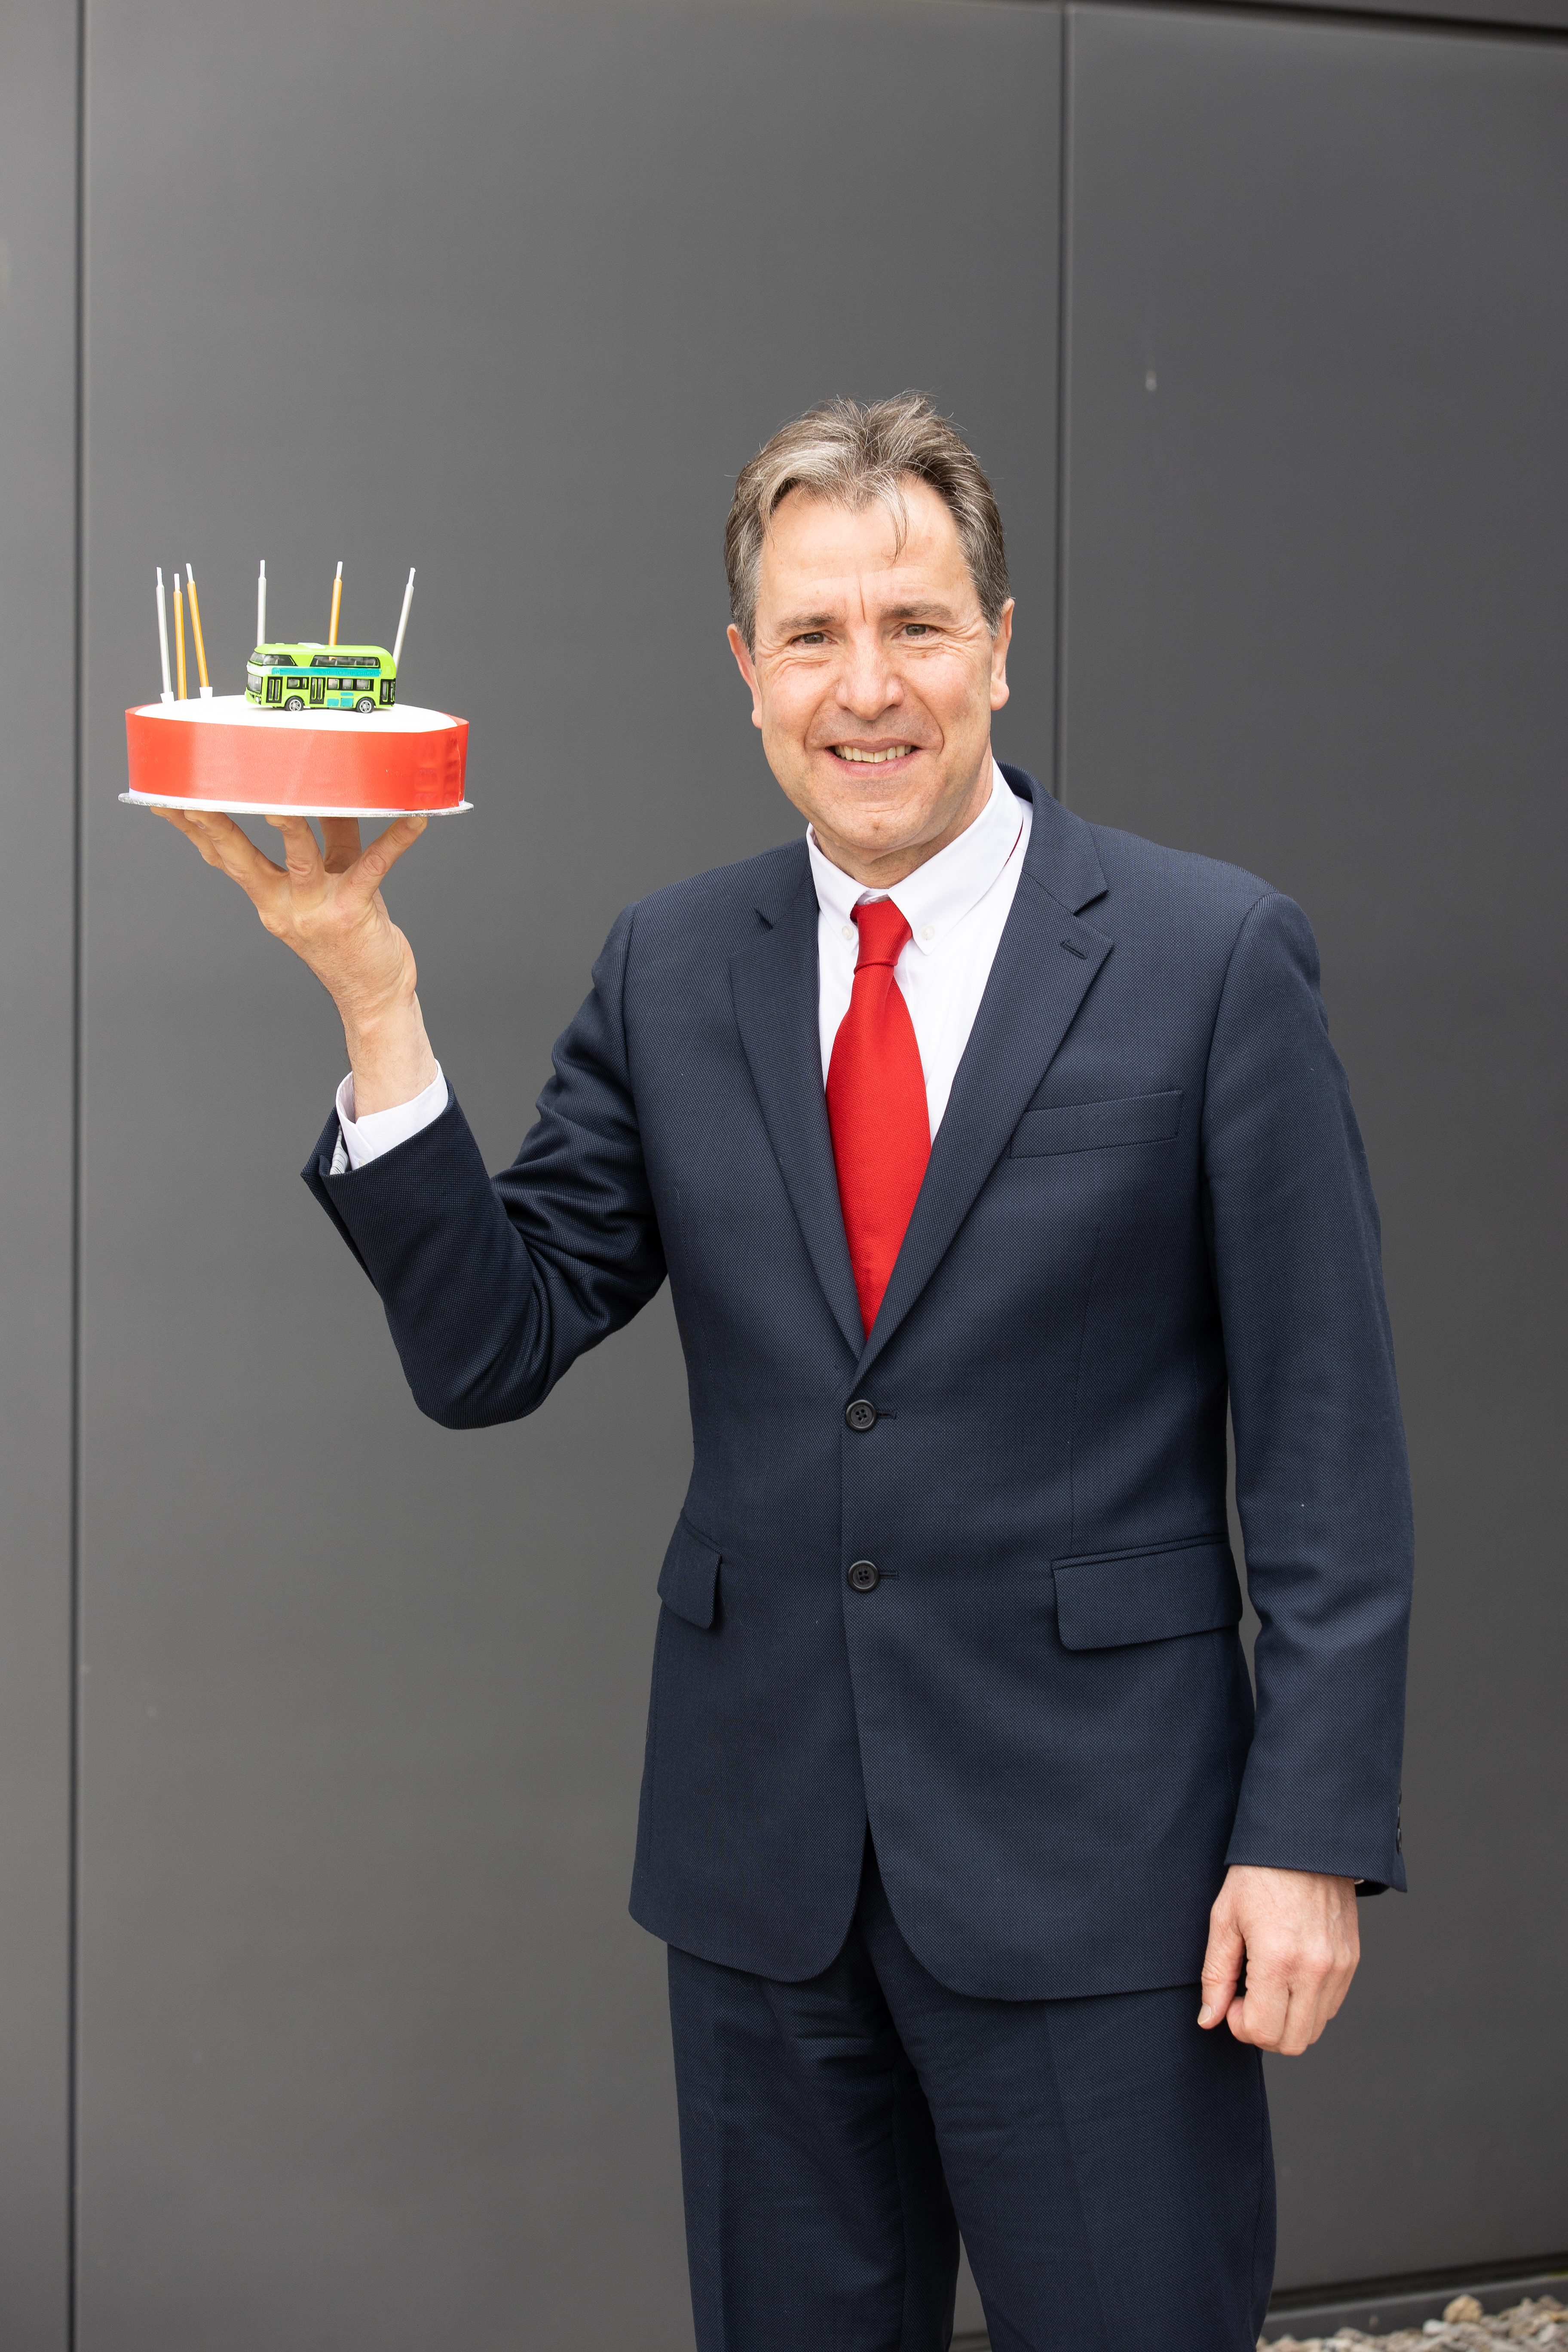 Dan Norris, metro mayor, holding a bus cake